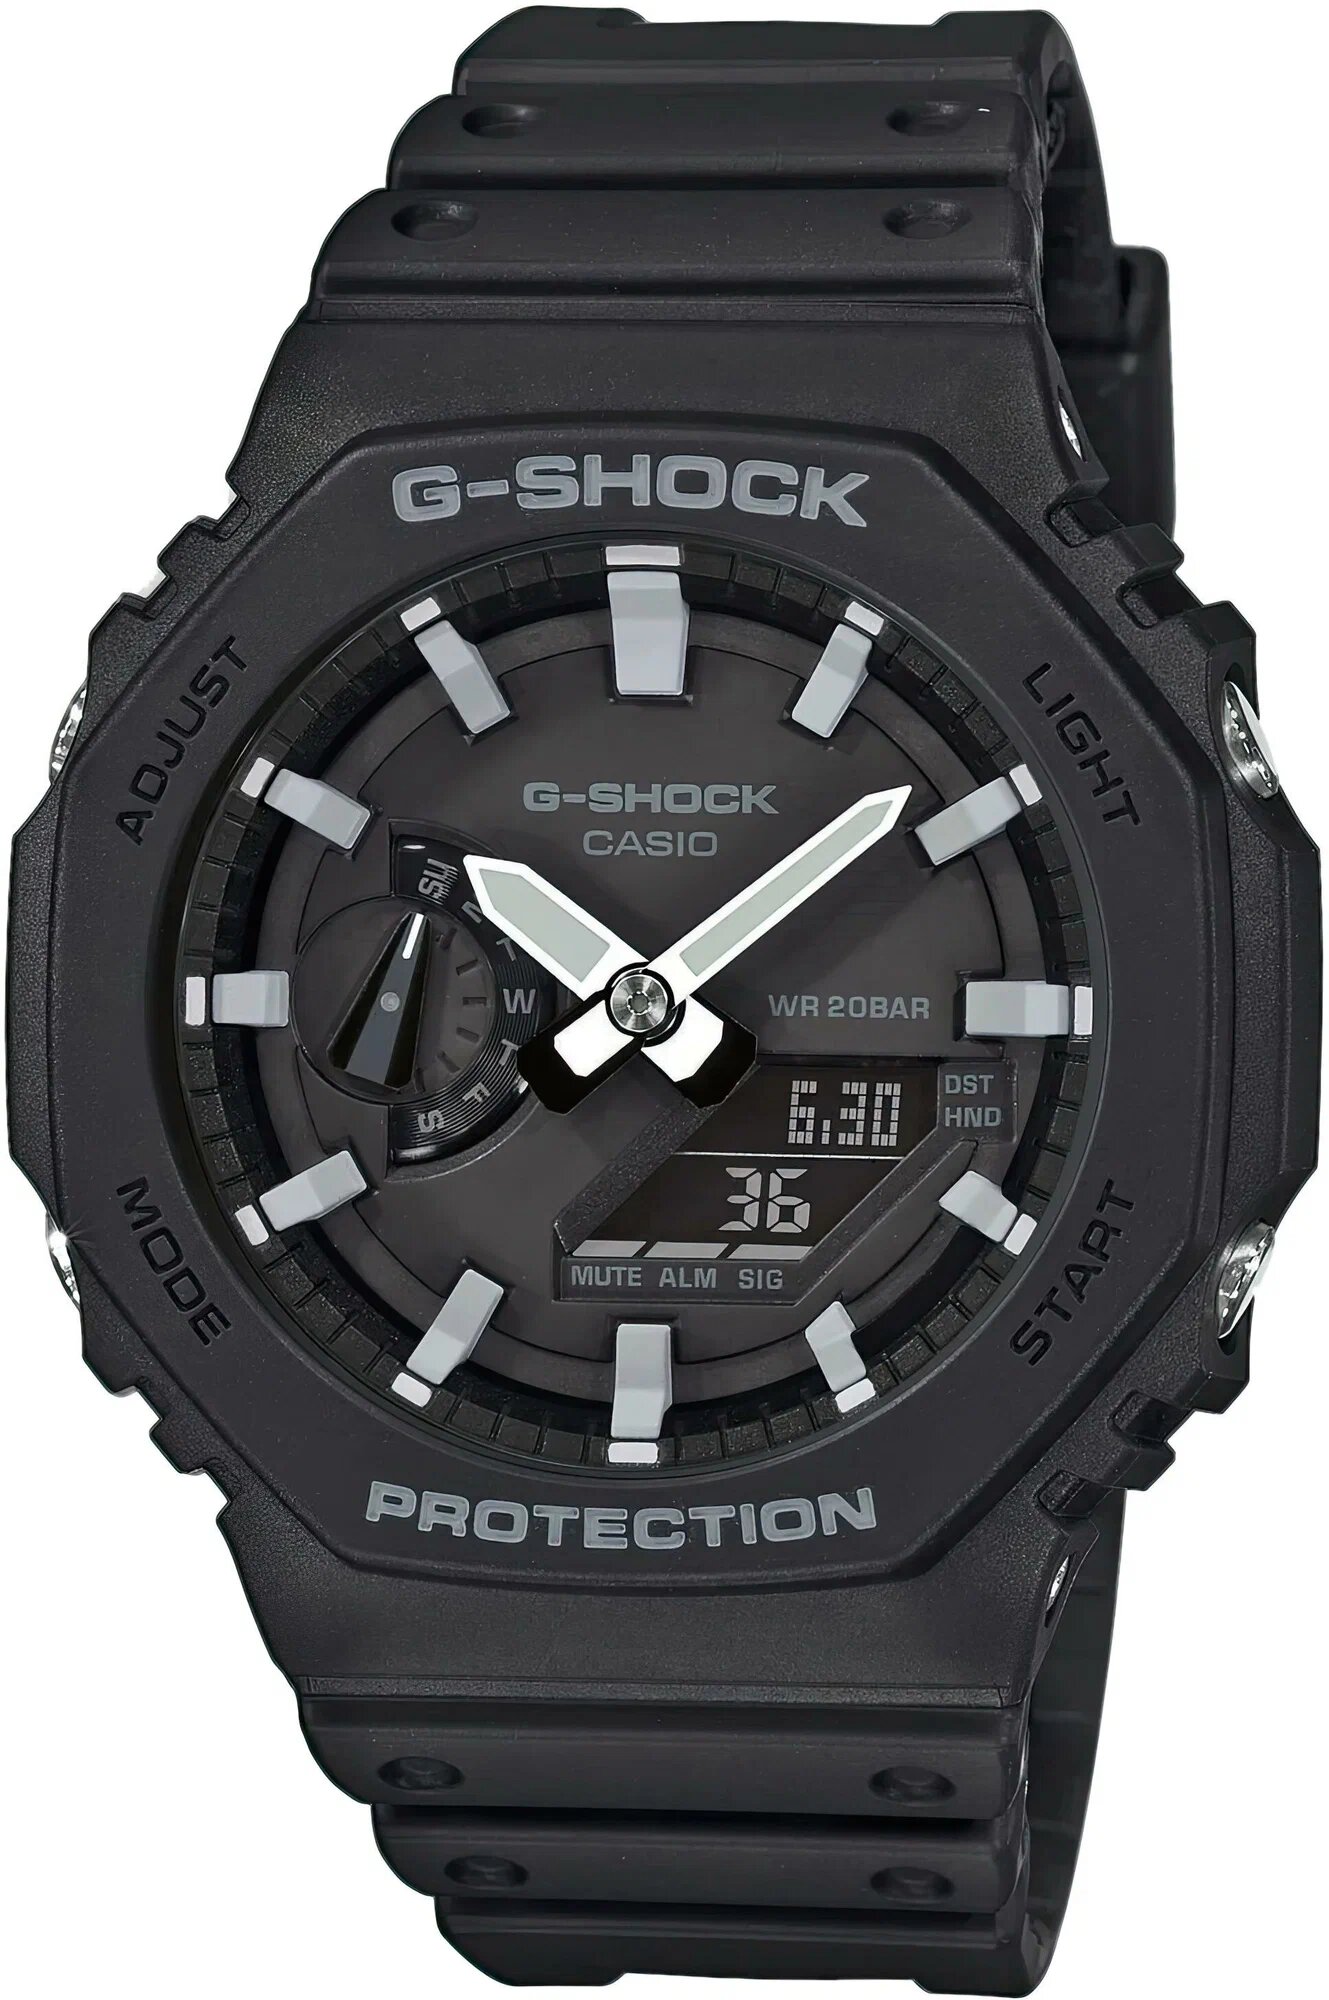 Наручные часы CASIO G-Shock GA-2100-1A1